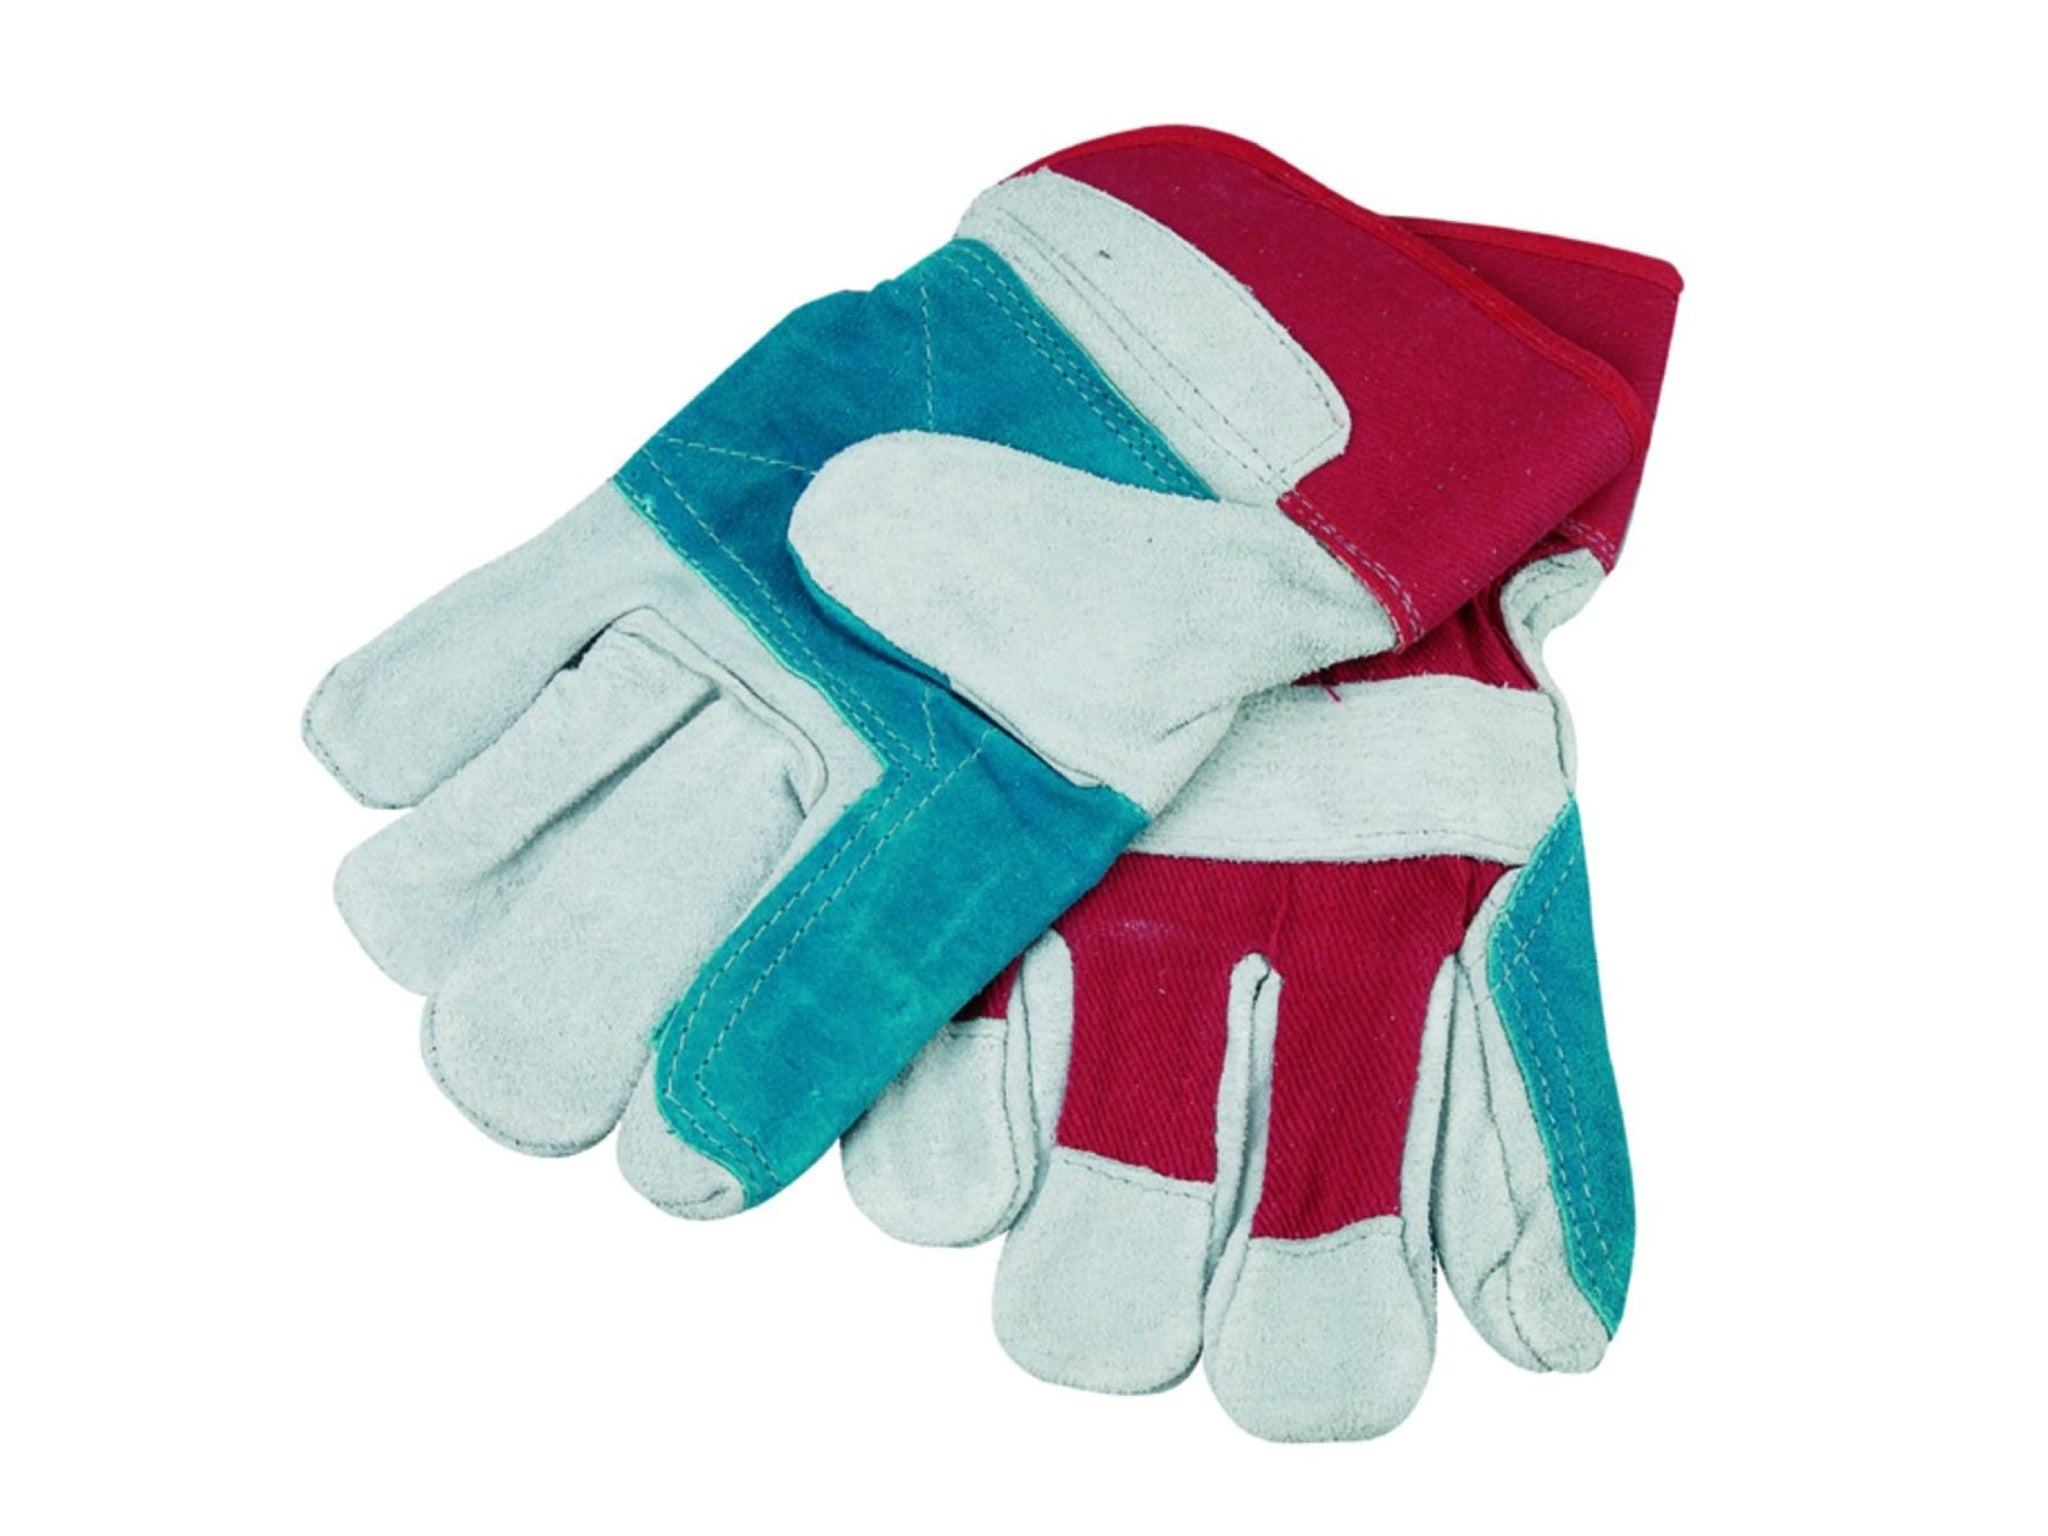 Wickes premium rigger tear resistant gloves indybest.jpg